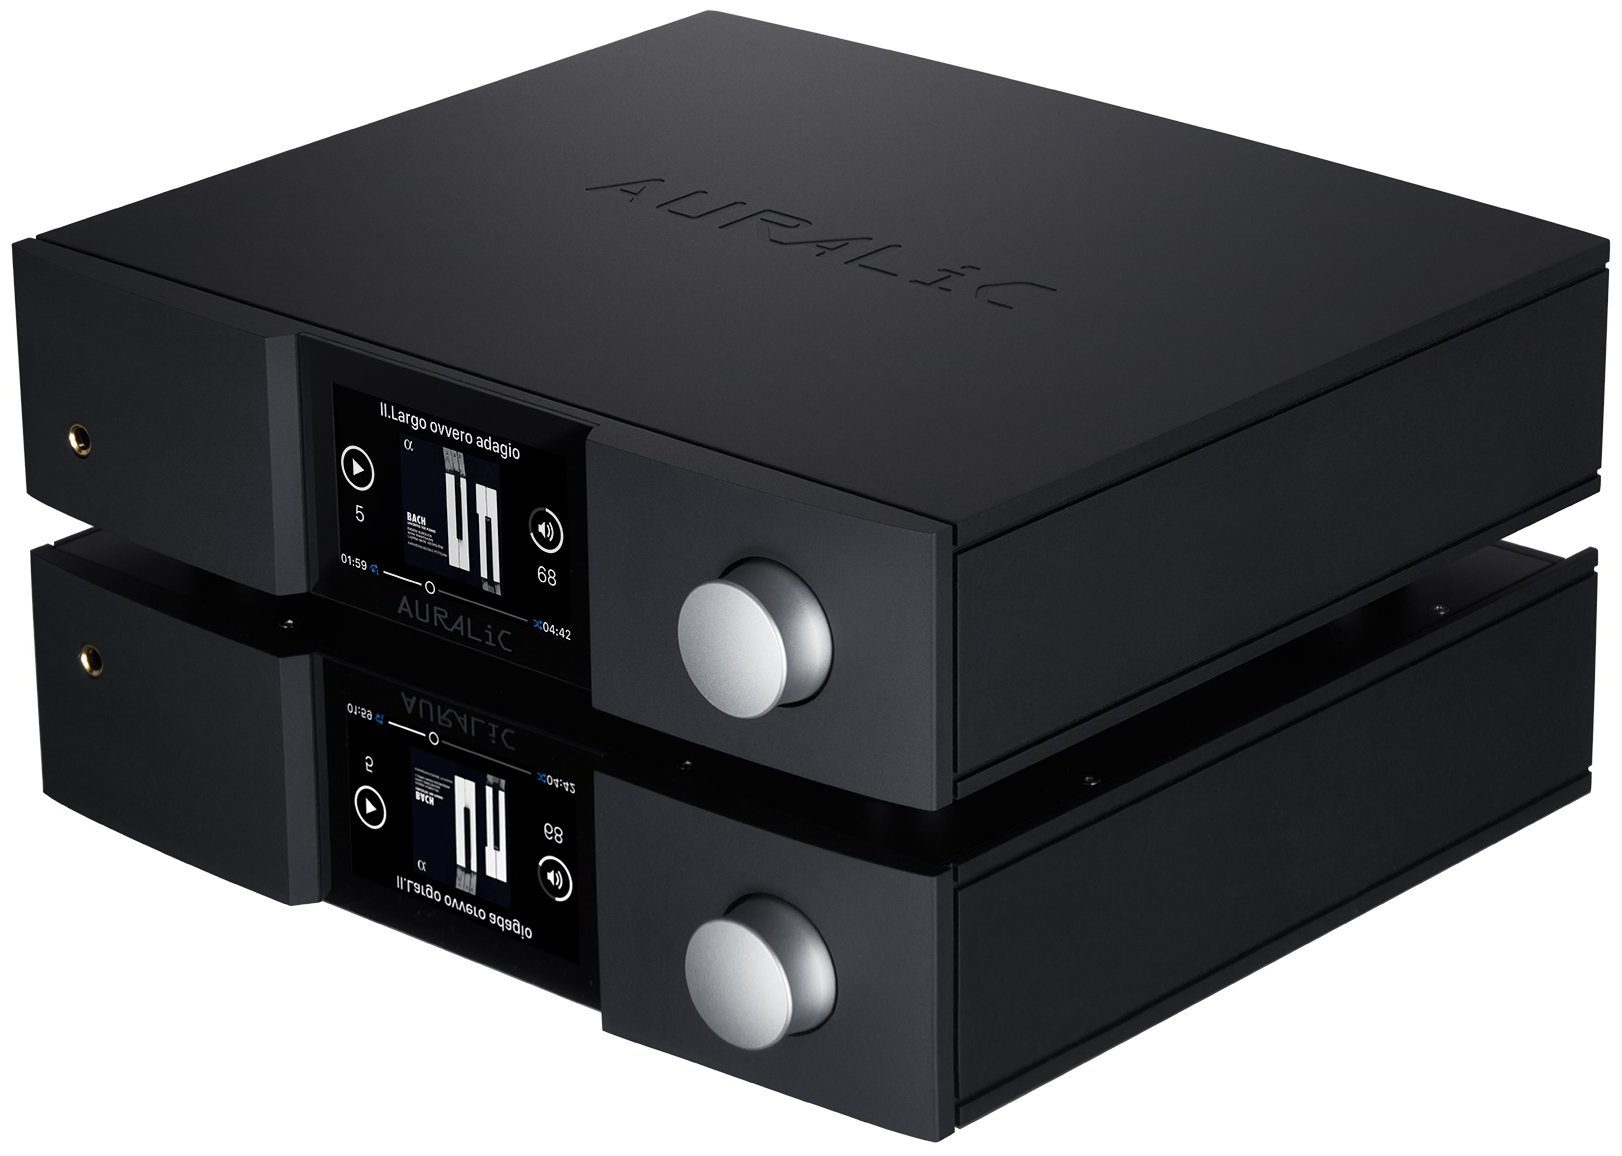 Auralic Altair G1 - Audio streamer